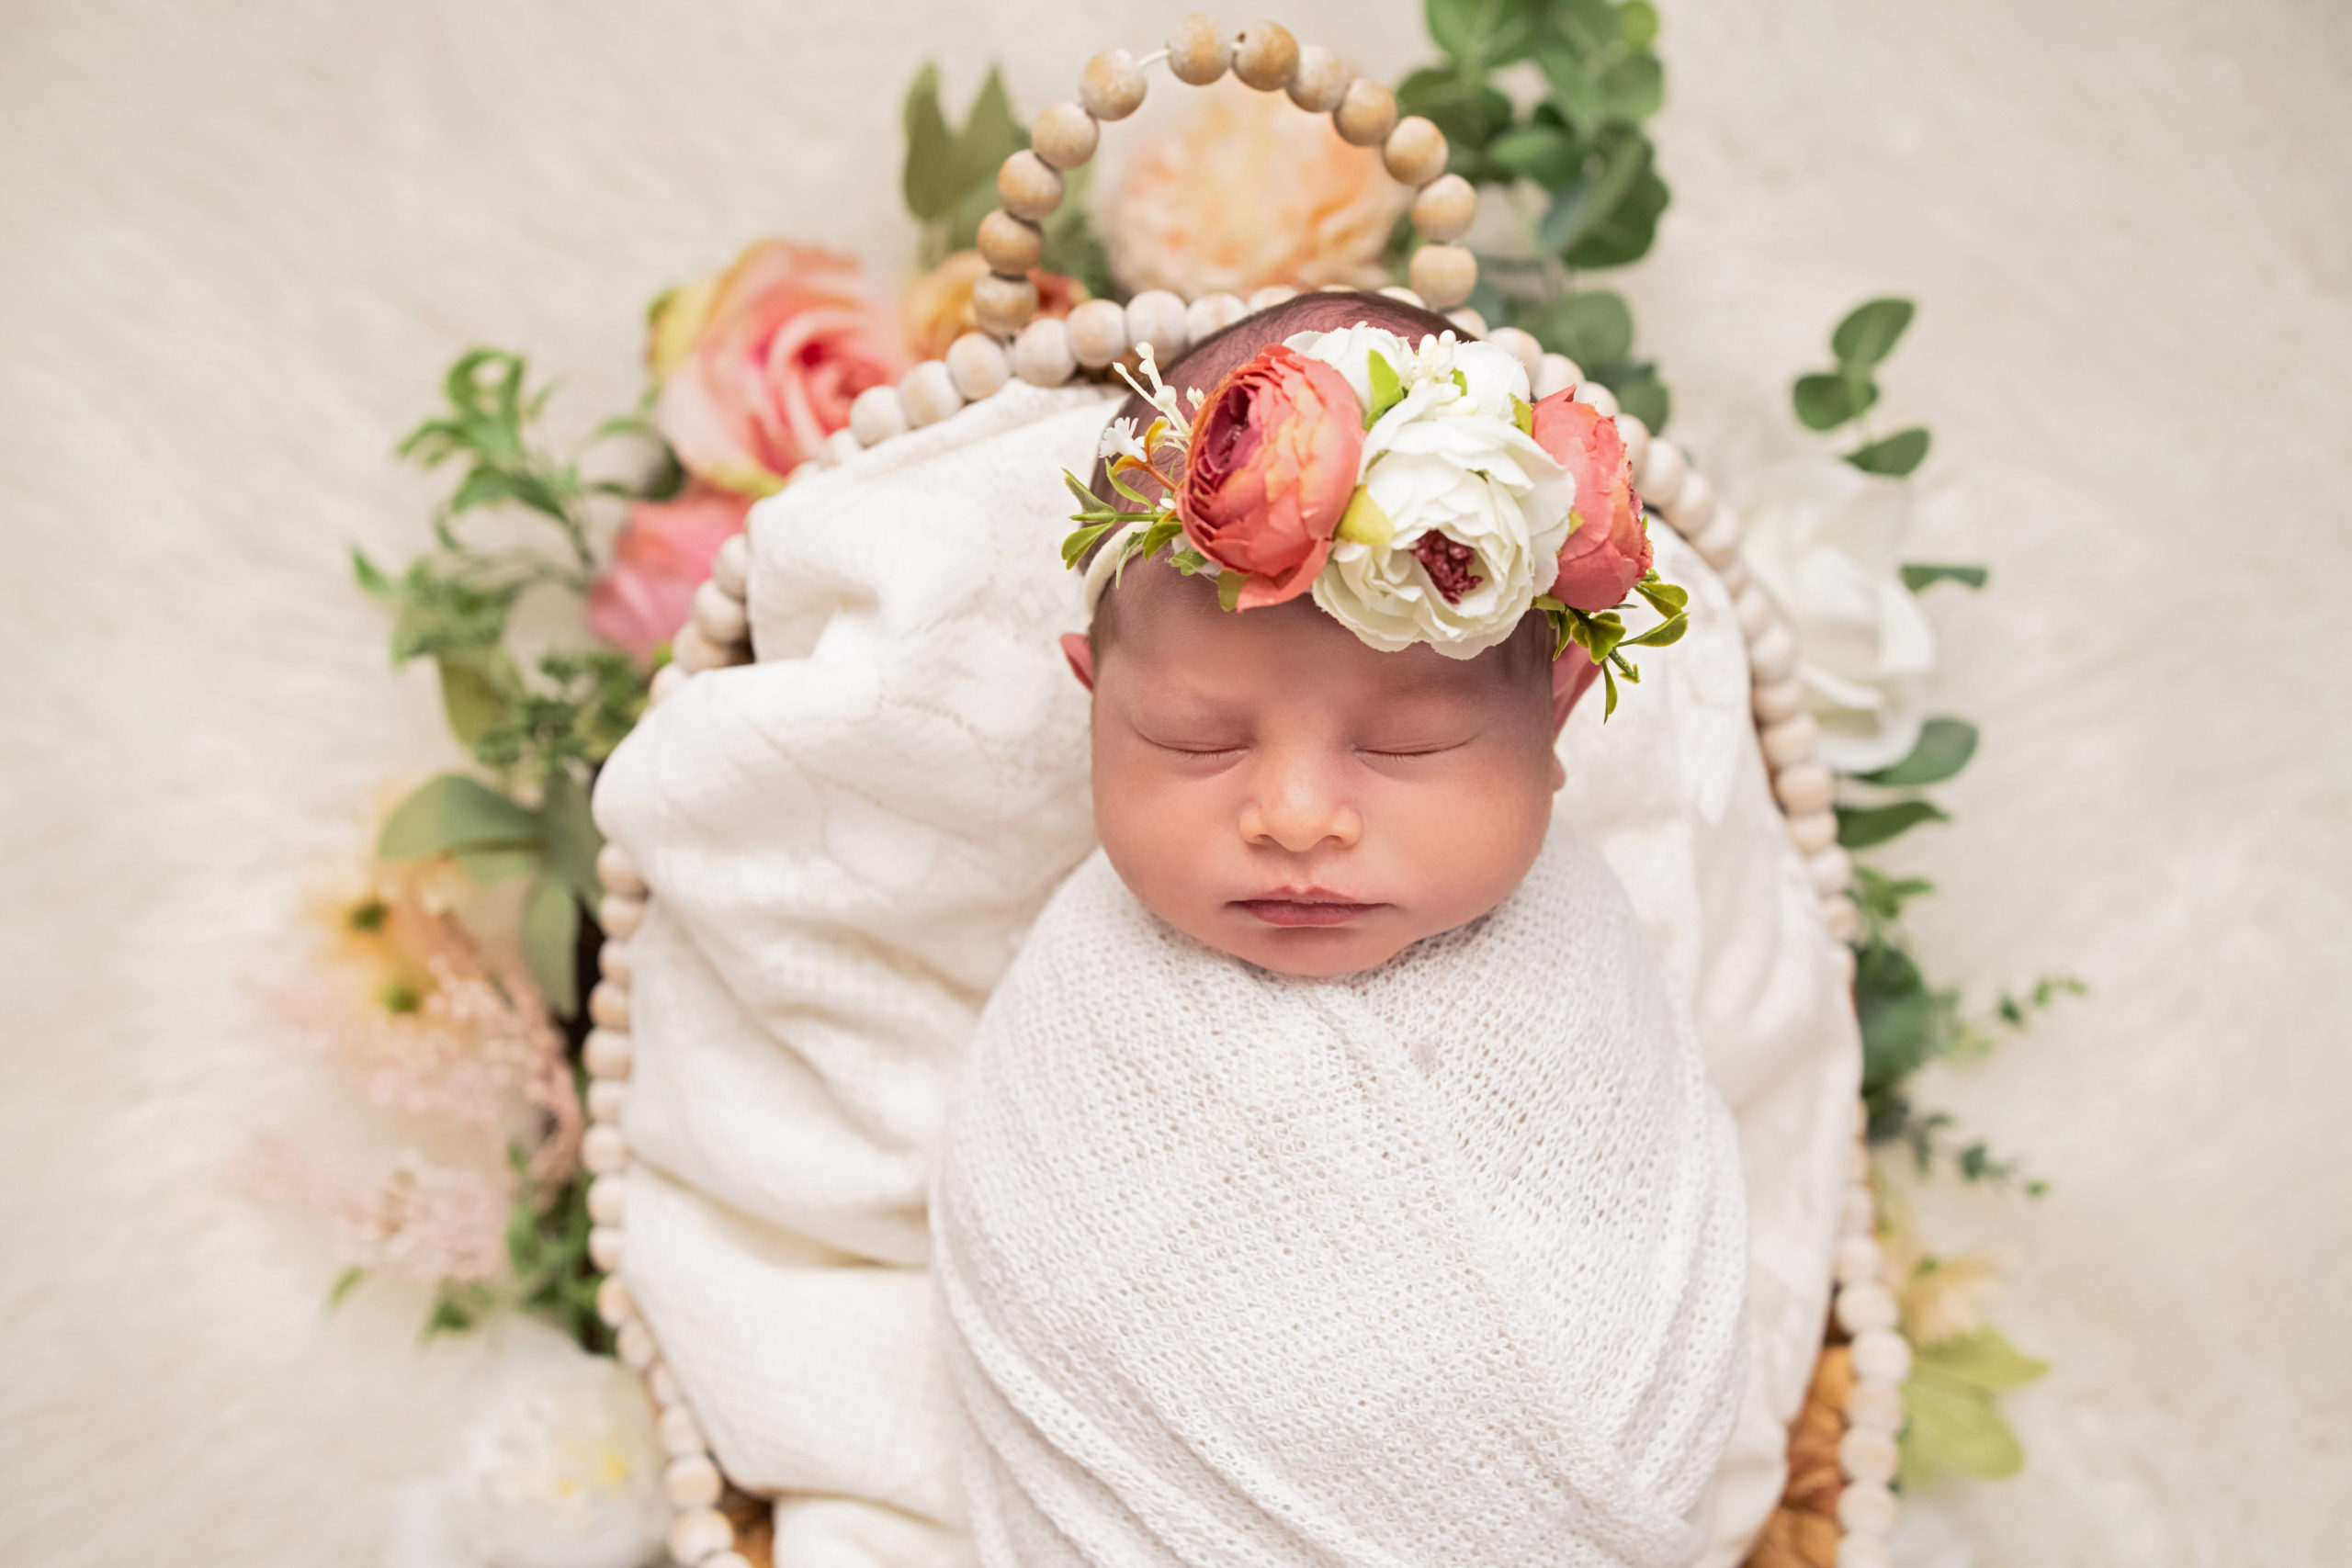 Newborn Baby in basket with flowers